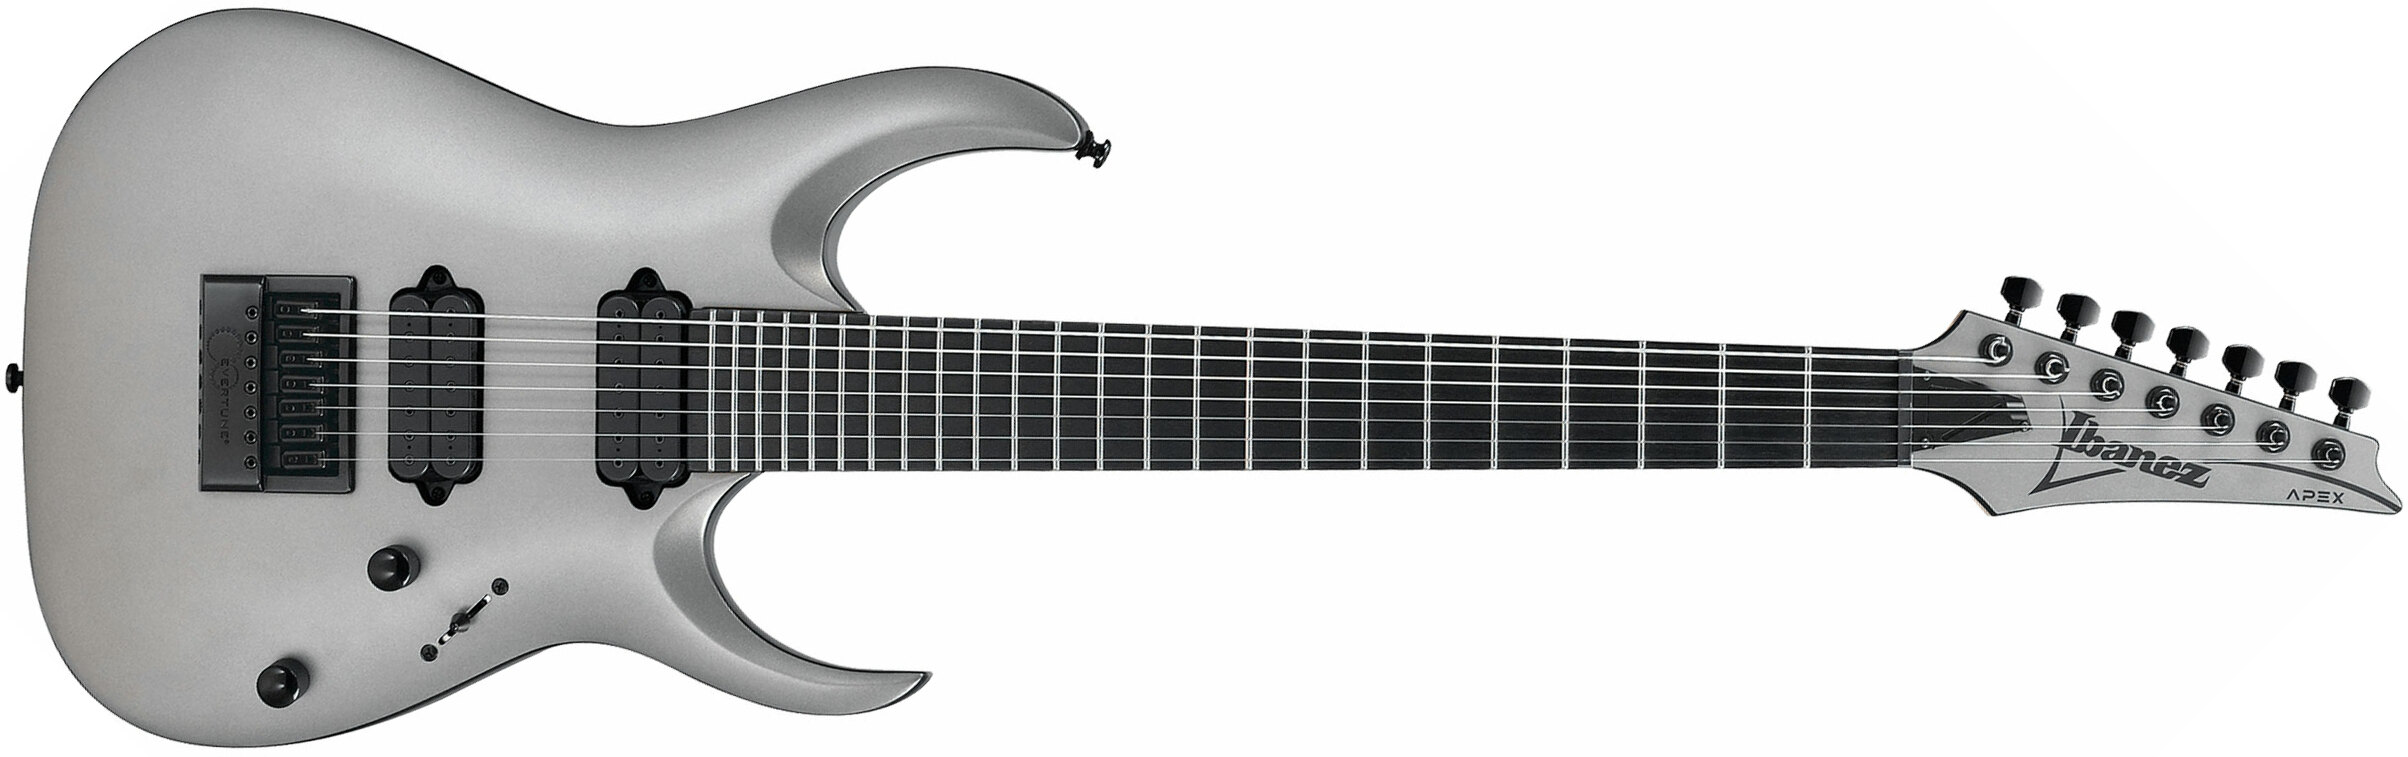 Ibanez Munky Apex30 Signature 7c Hh Dimarzio Ht Eb - Metallic Gray Matte - 7 string electric guitar - Main picture